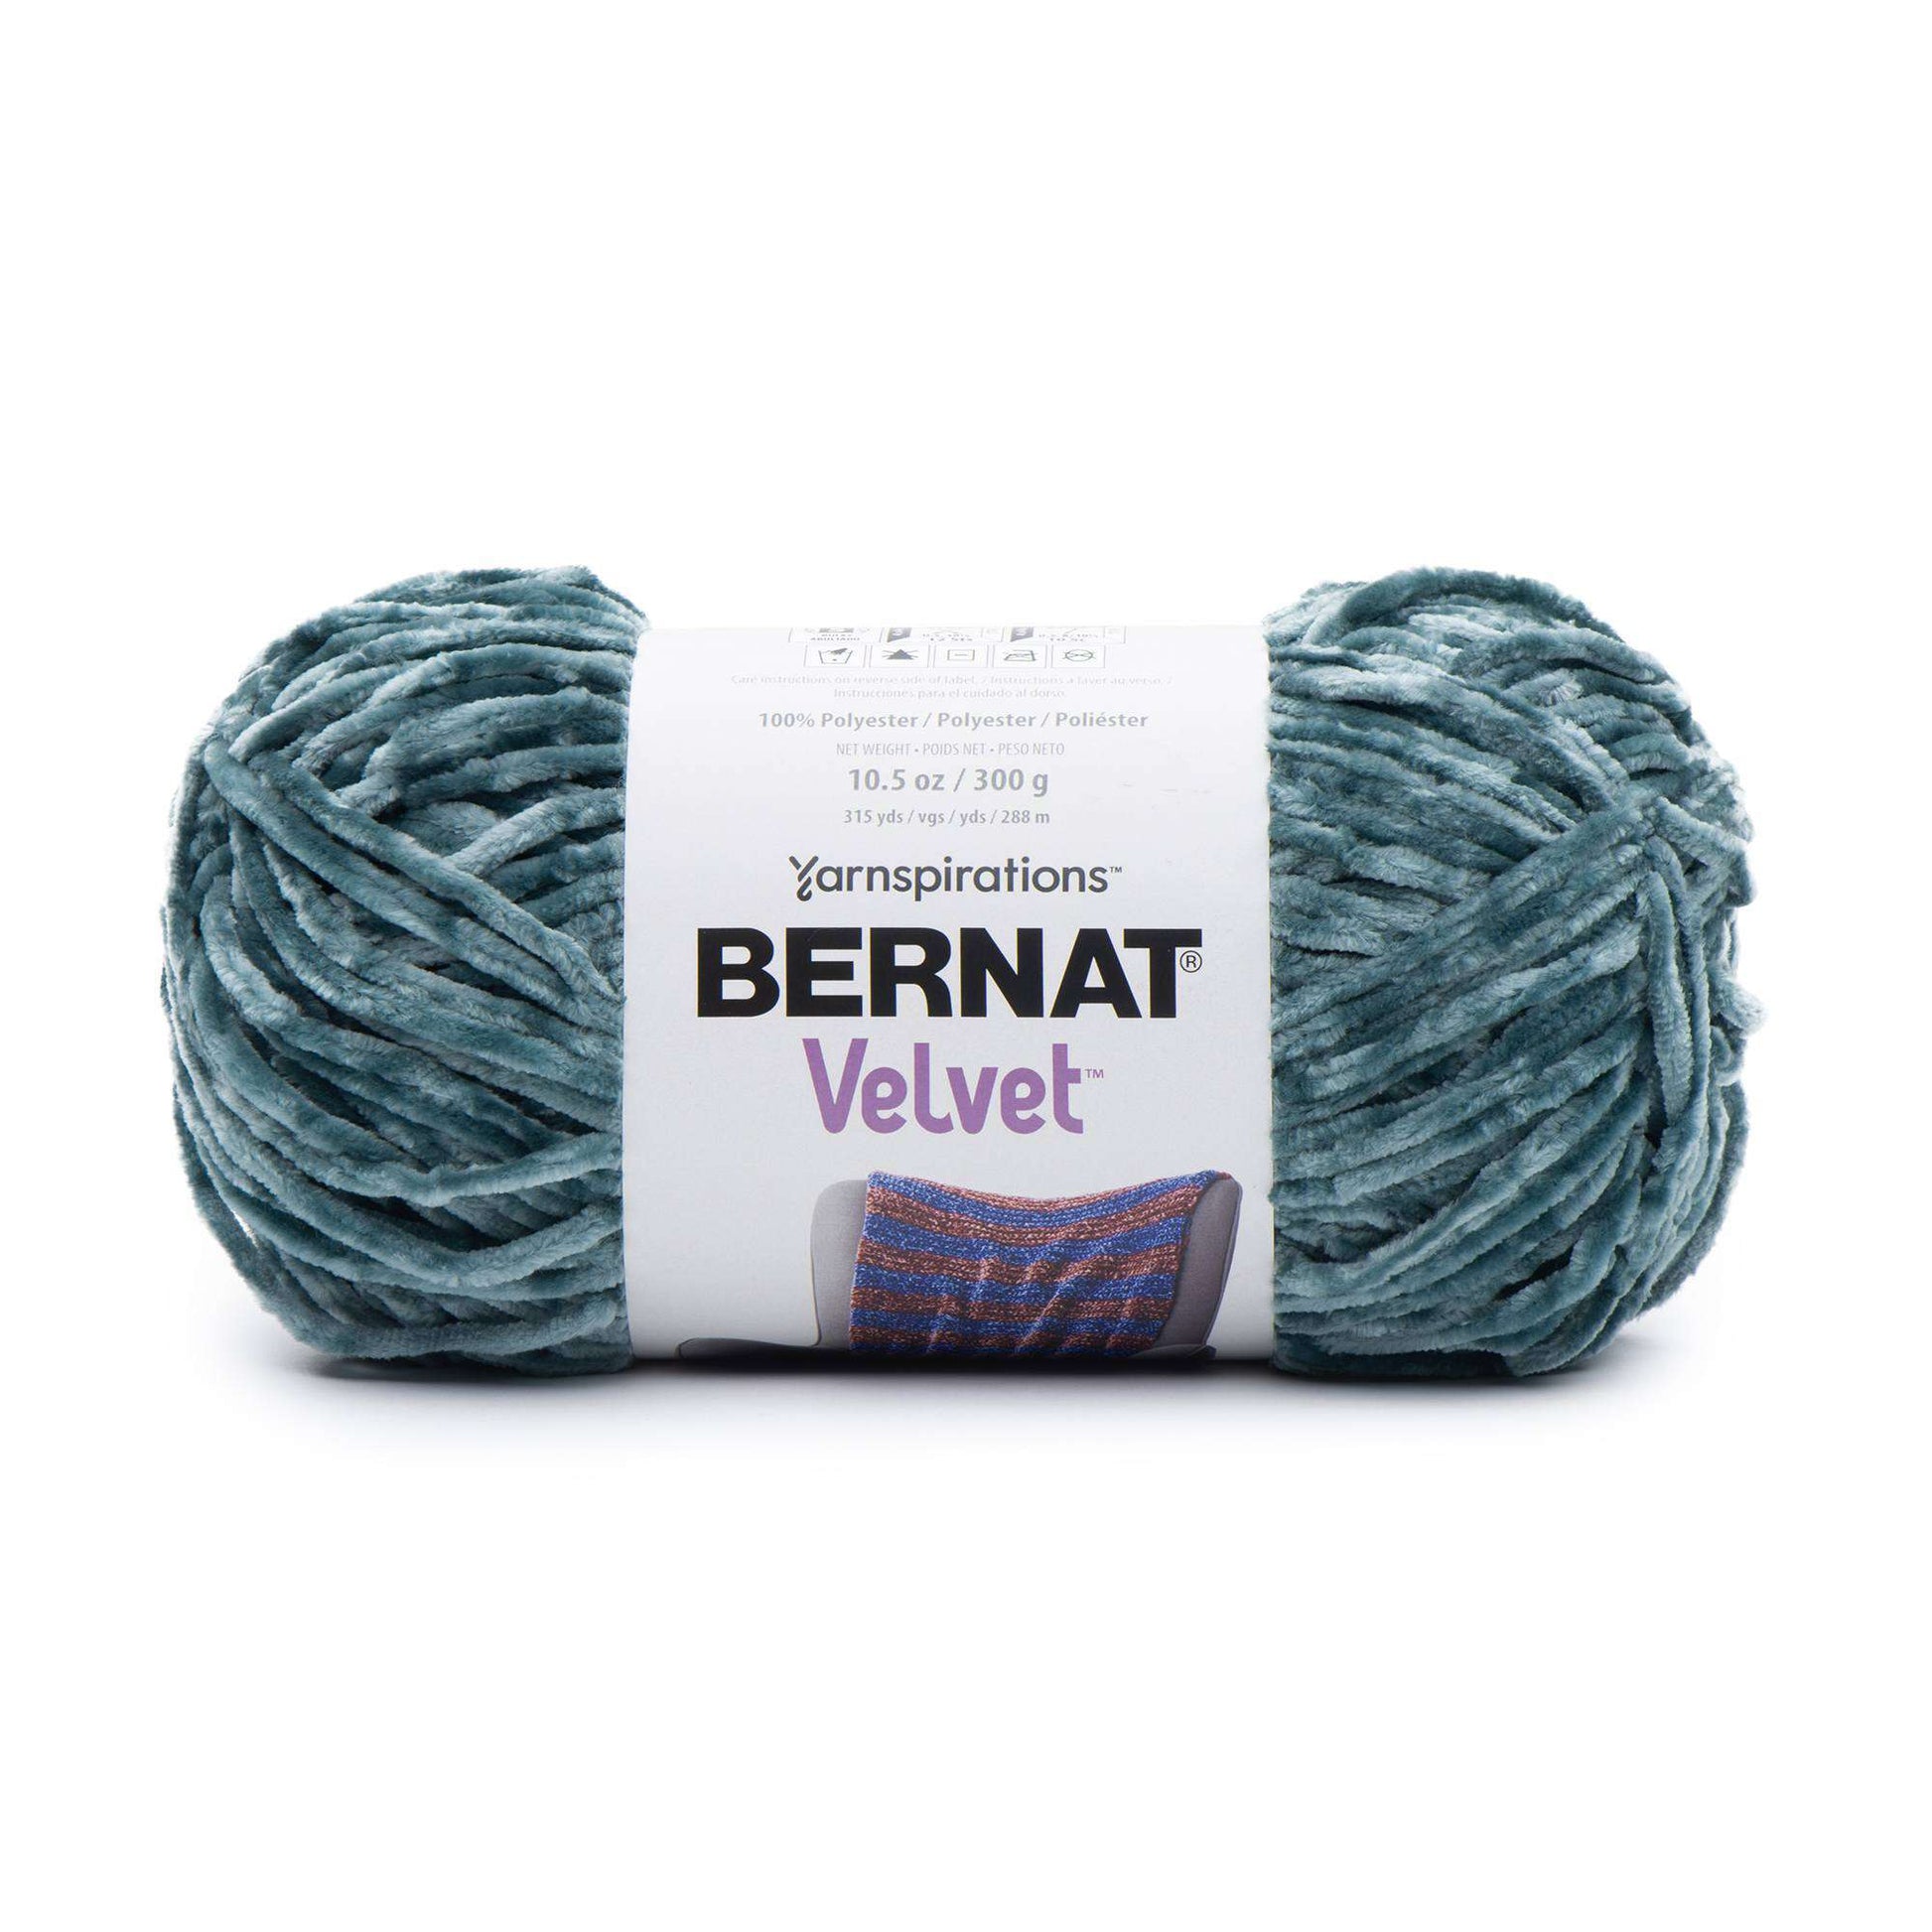 Bernat Velvet Yarn 100% Polyester Luxuriously Soft for Velvety Projects for  Home Knit, Crochet, Lush Blankets or Statement Pillows -  Norway